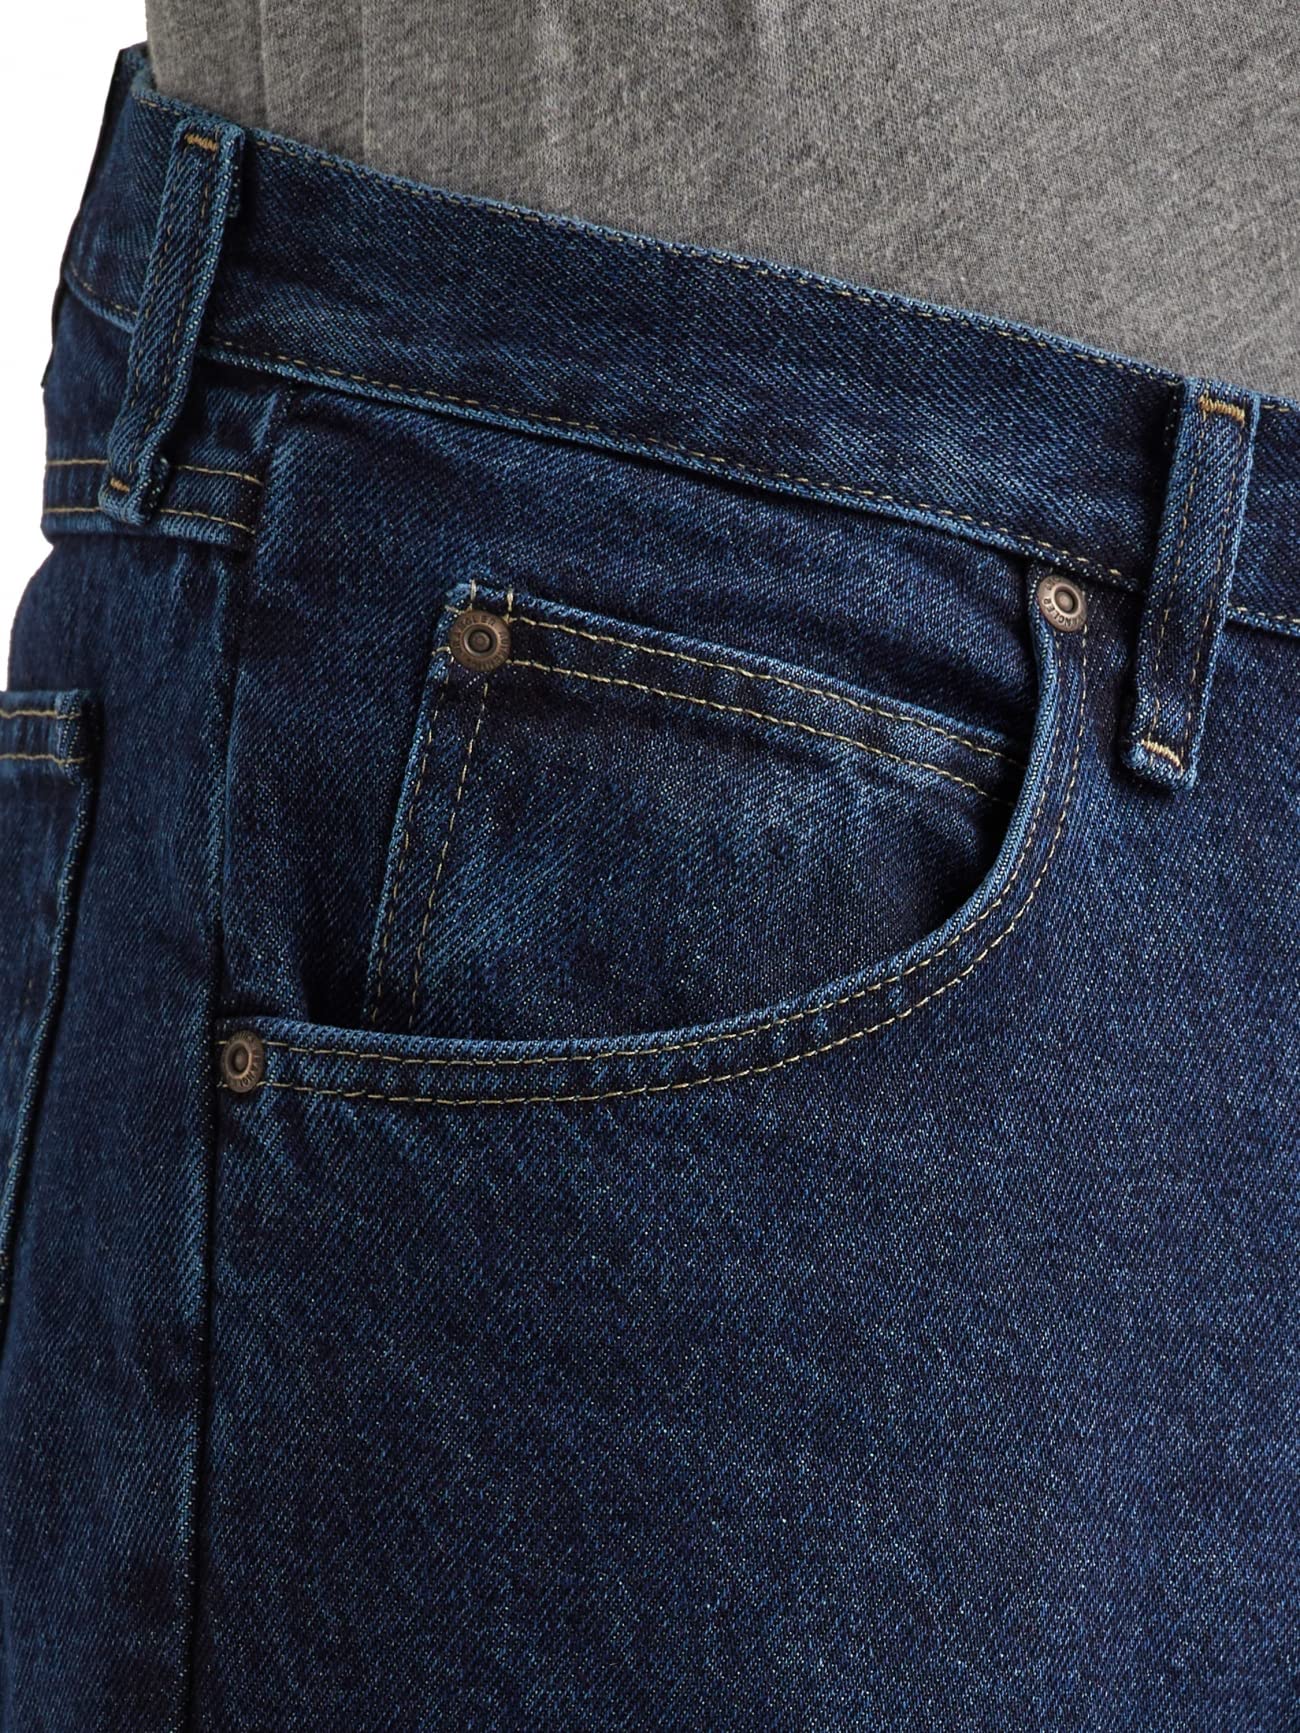 Wrangler Authentics Men's Big & Tall Classic 5-Pocket Relaxed Fit Cotton Jean, Dark Rinse, 52W X 32L